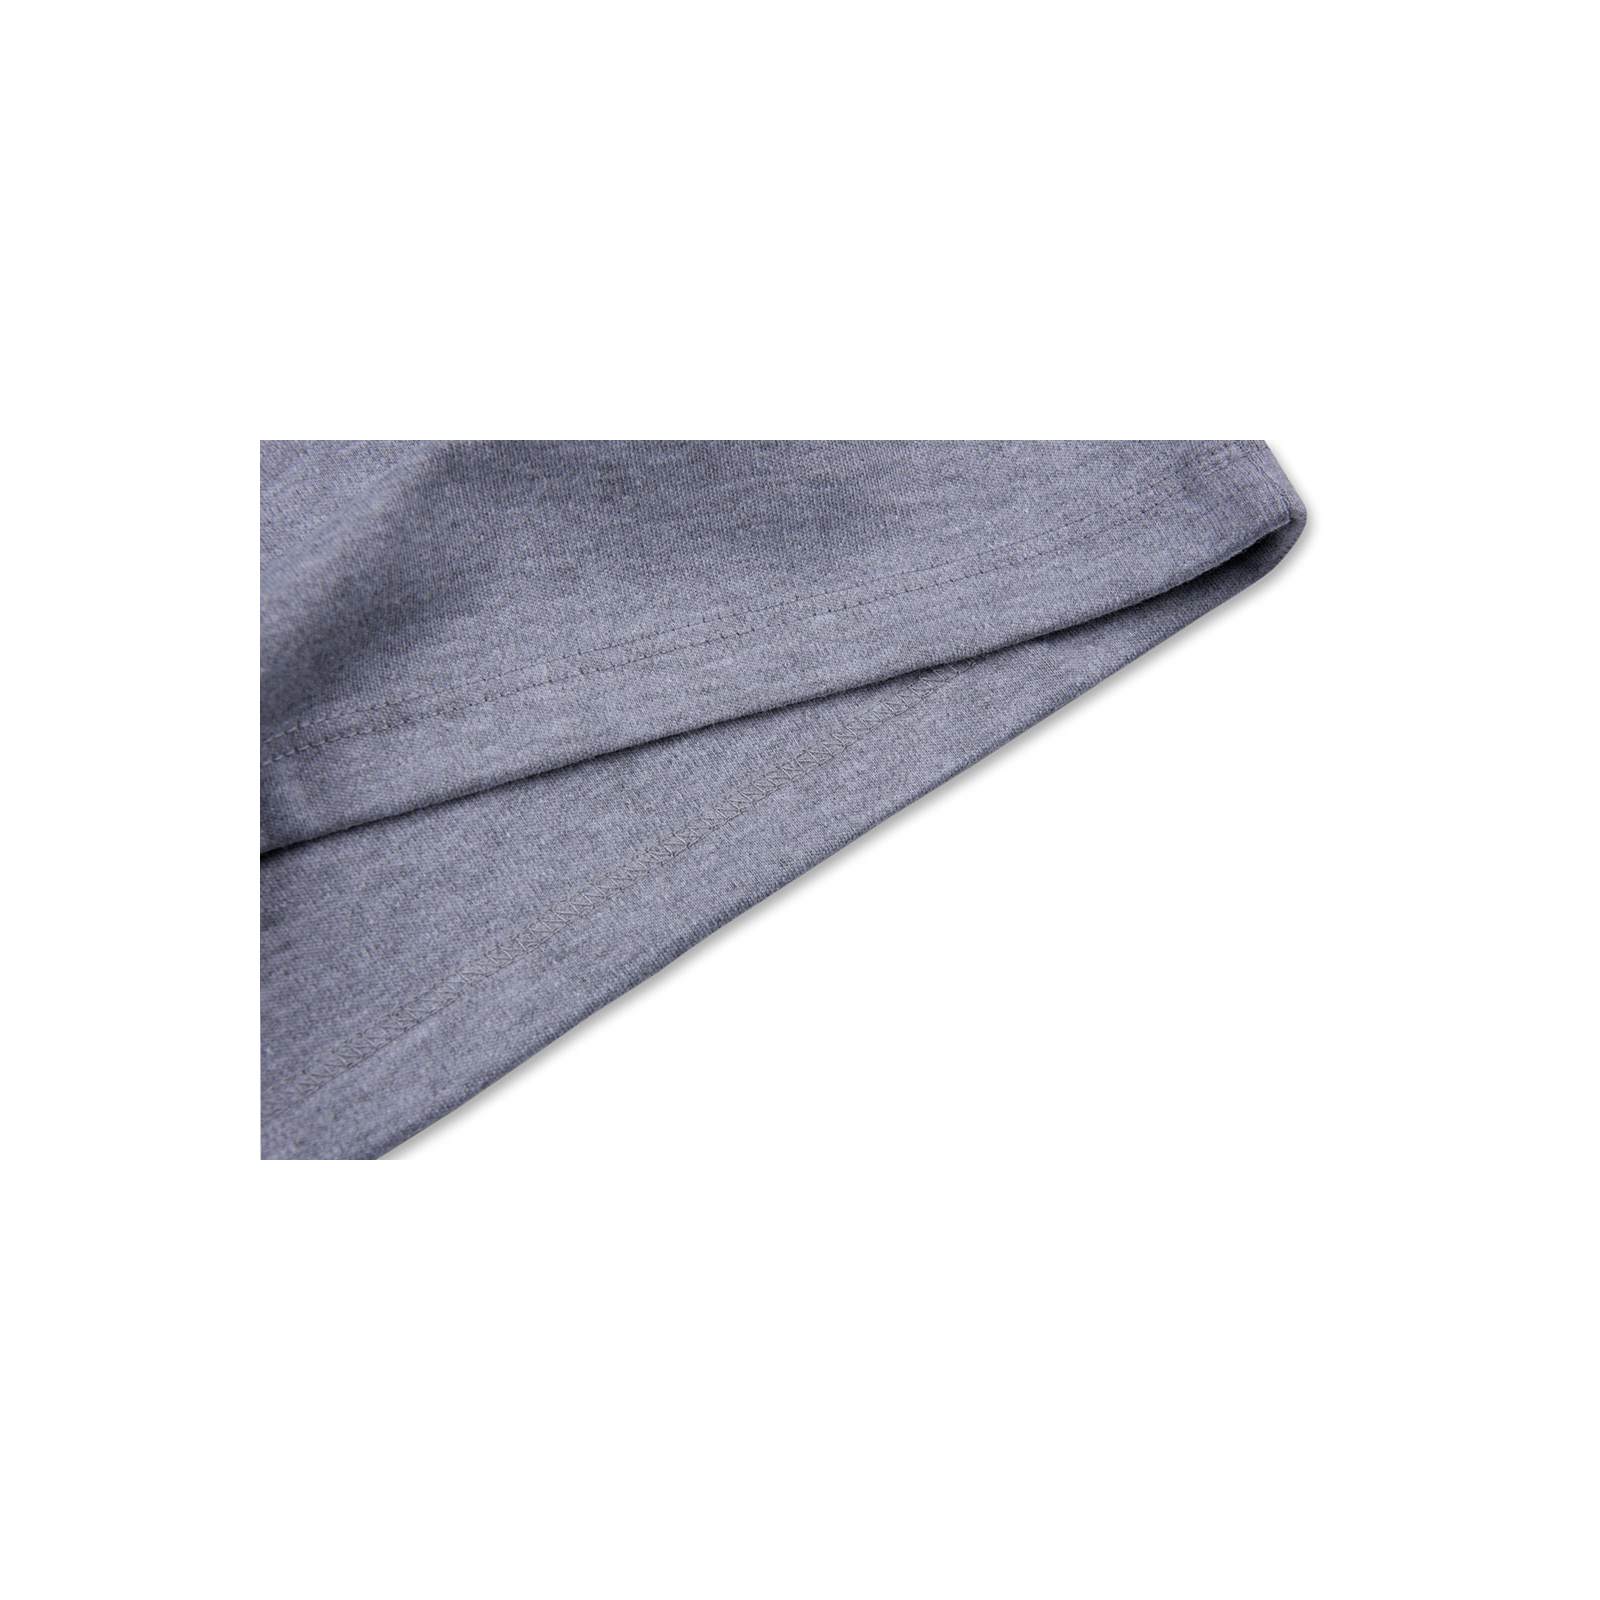 Кофта Lovetti водолазка серая меланжевая (1011-86-gray) изображение 5